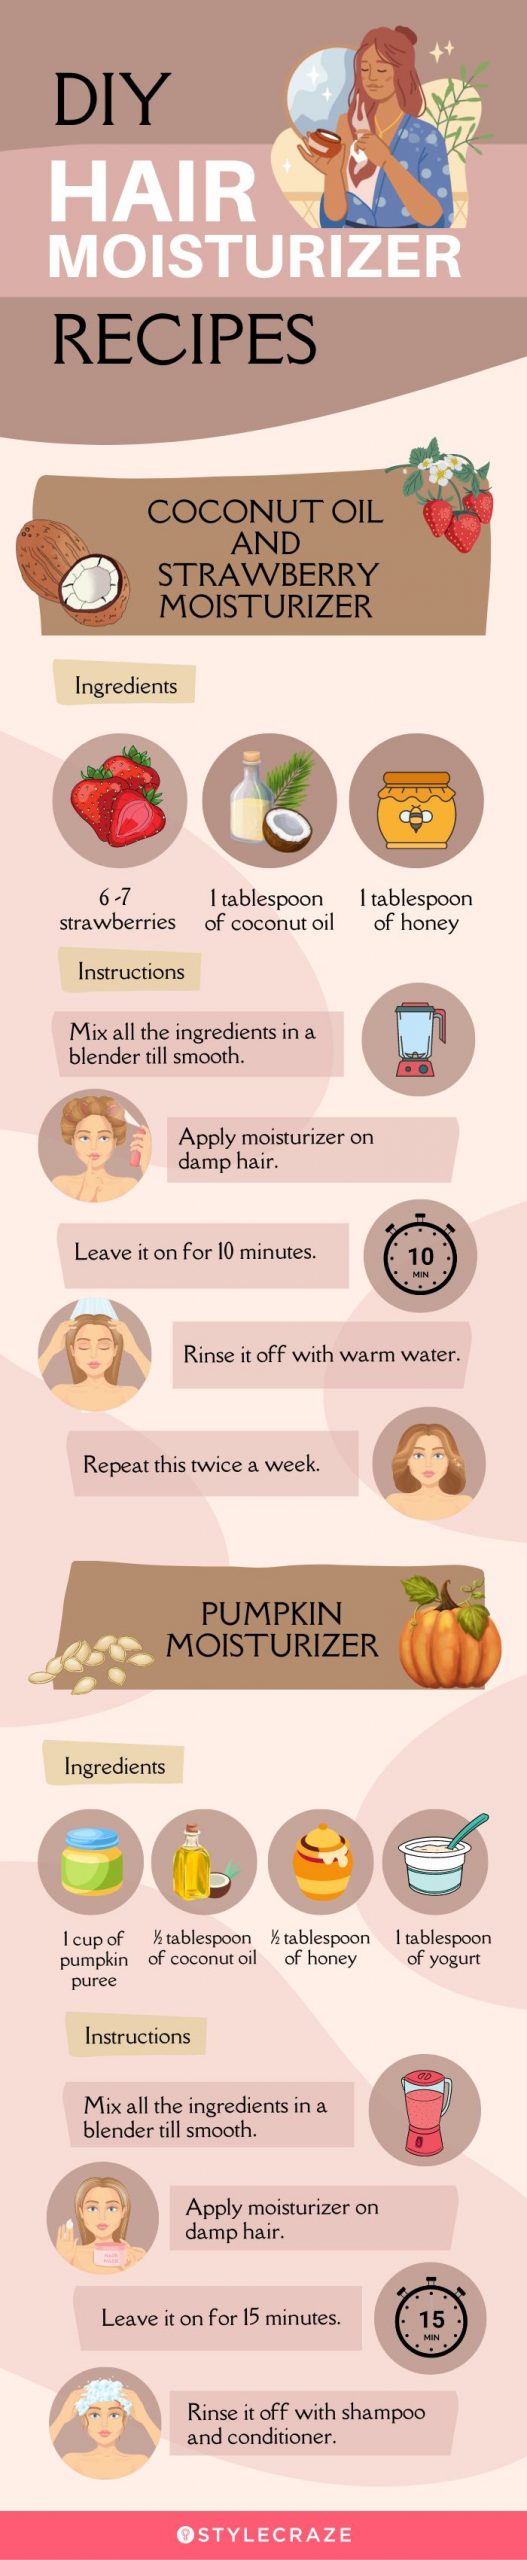 diy hair moisturizer recipes [infographic]